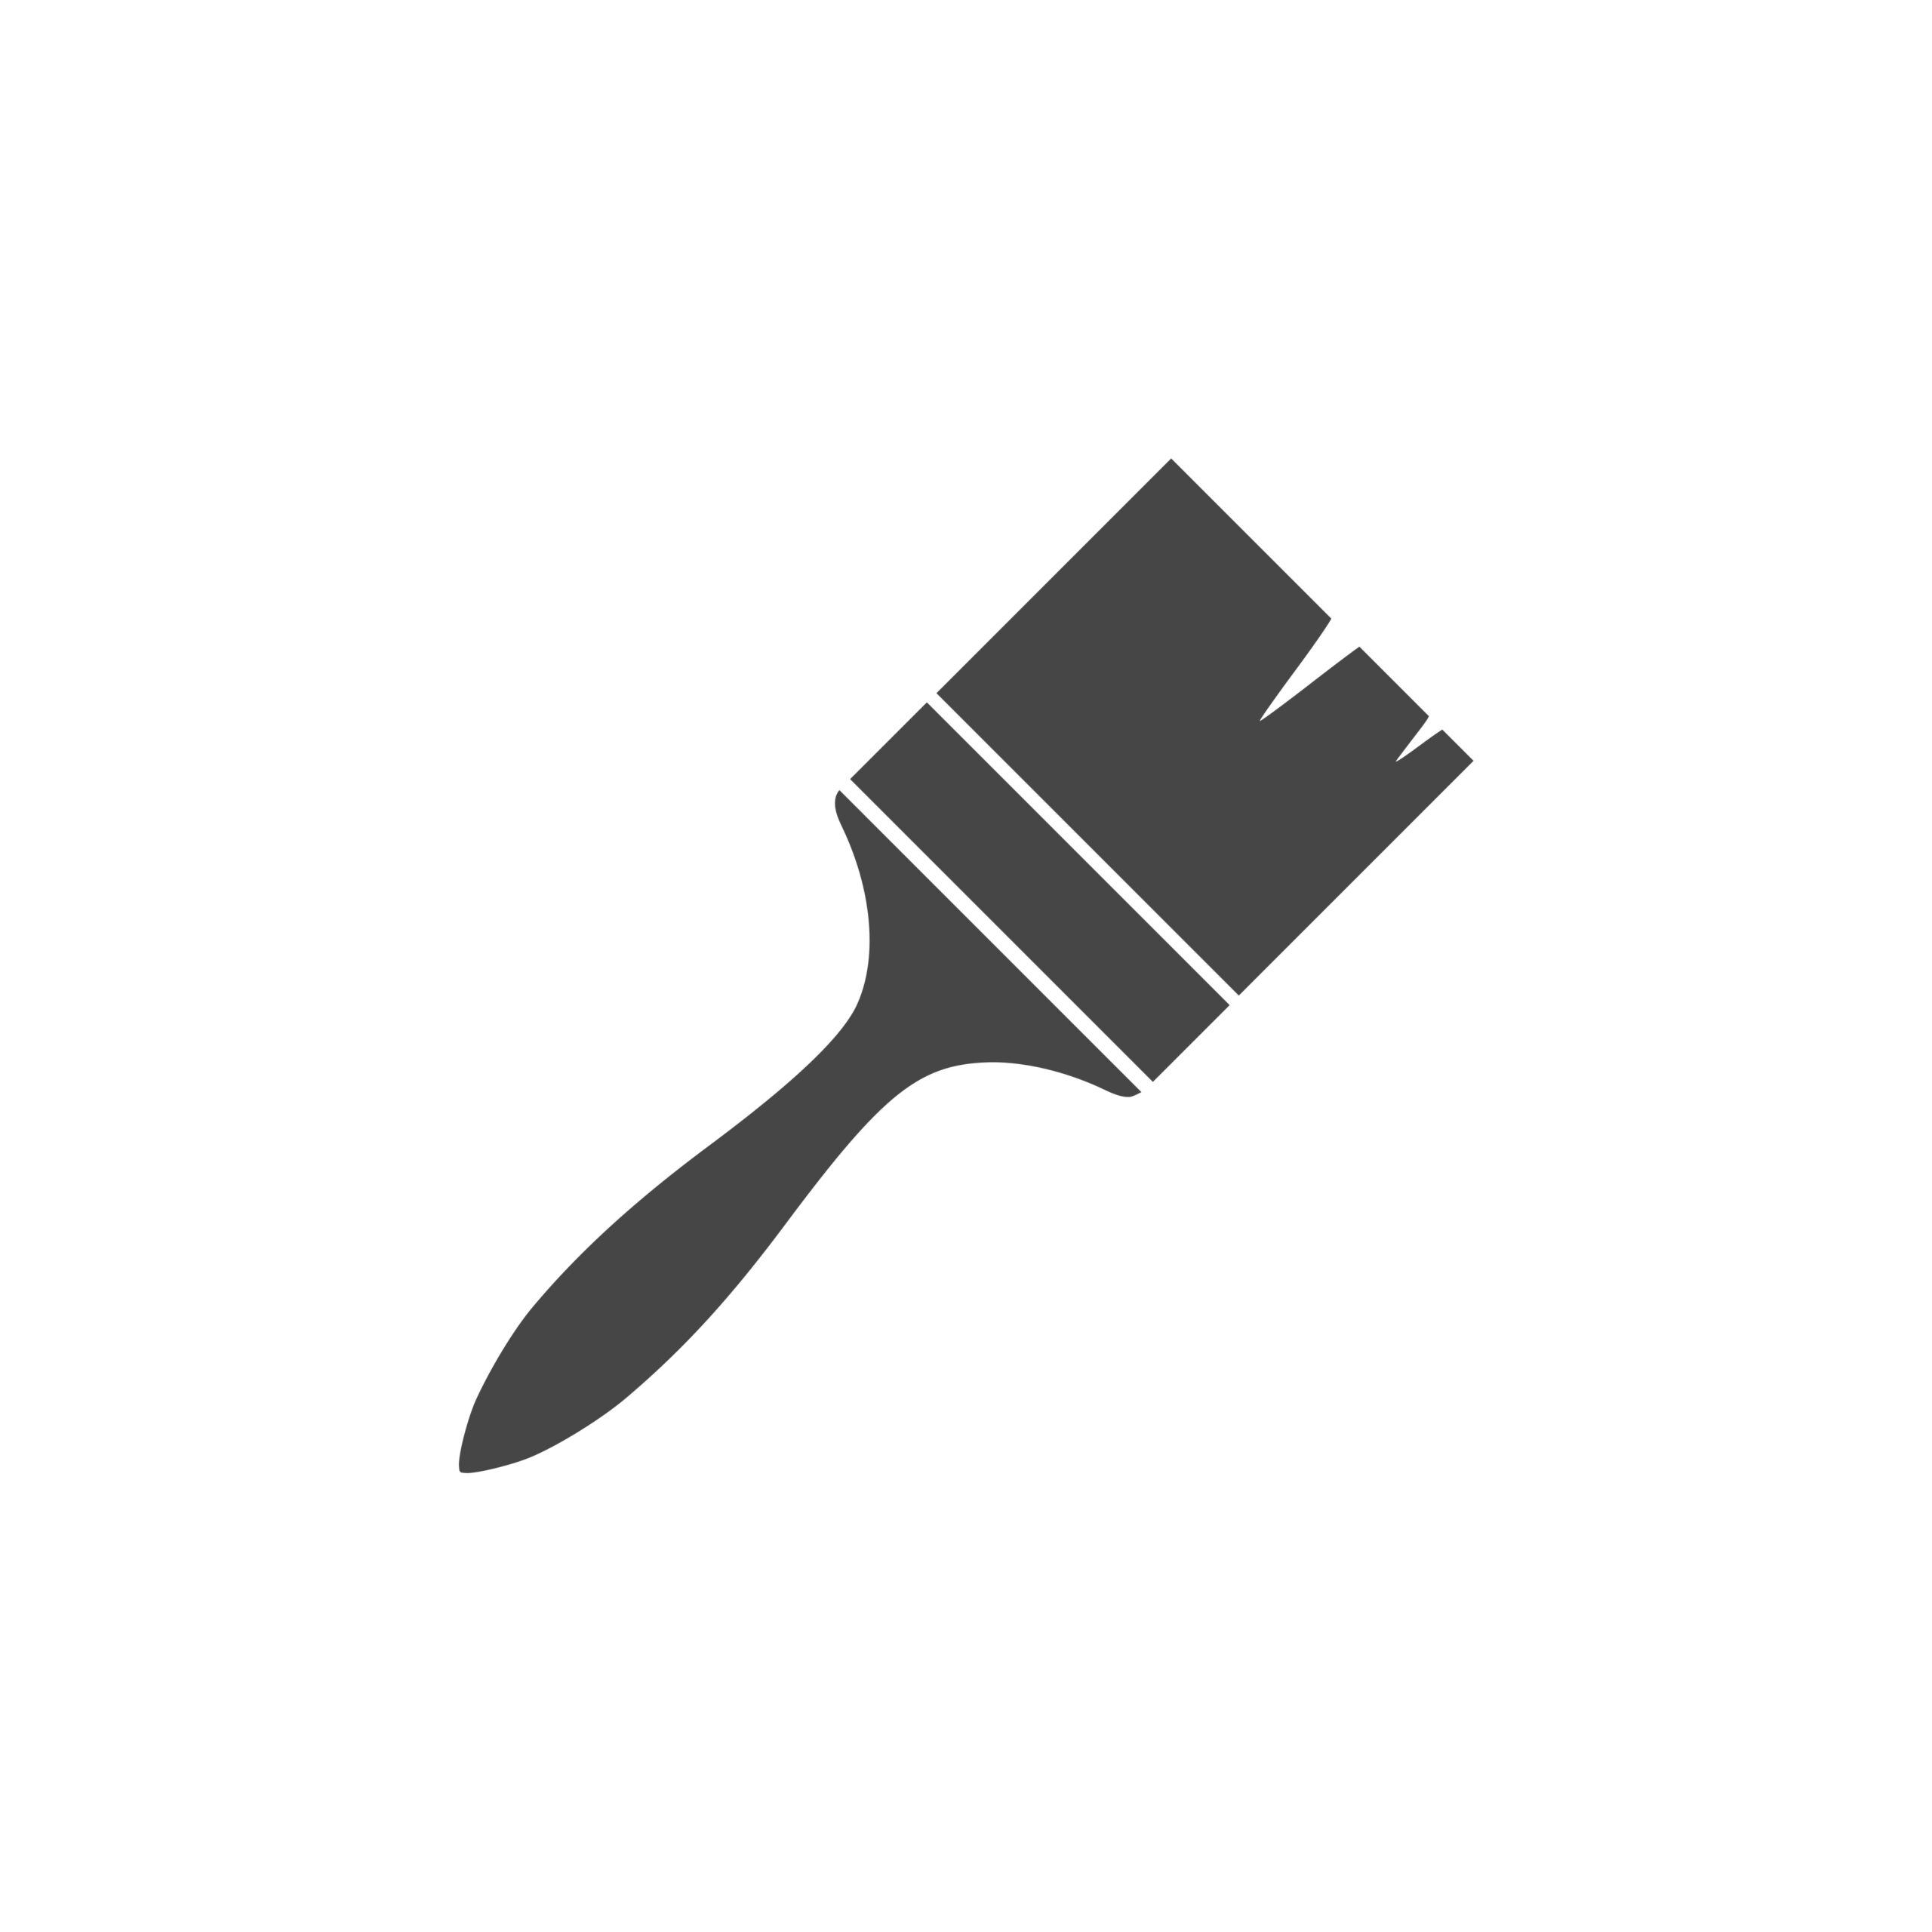 Paint brush icon vector